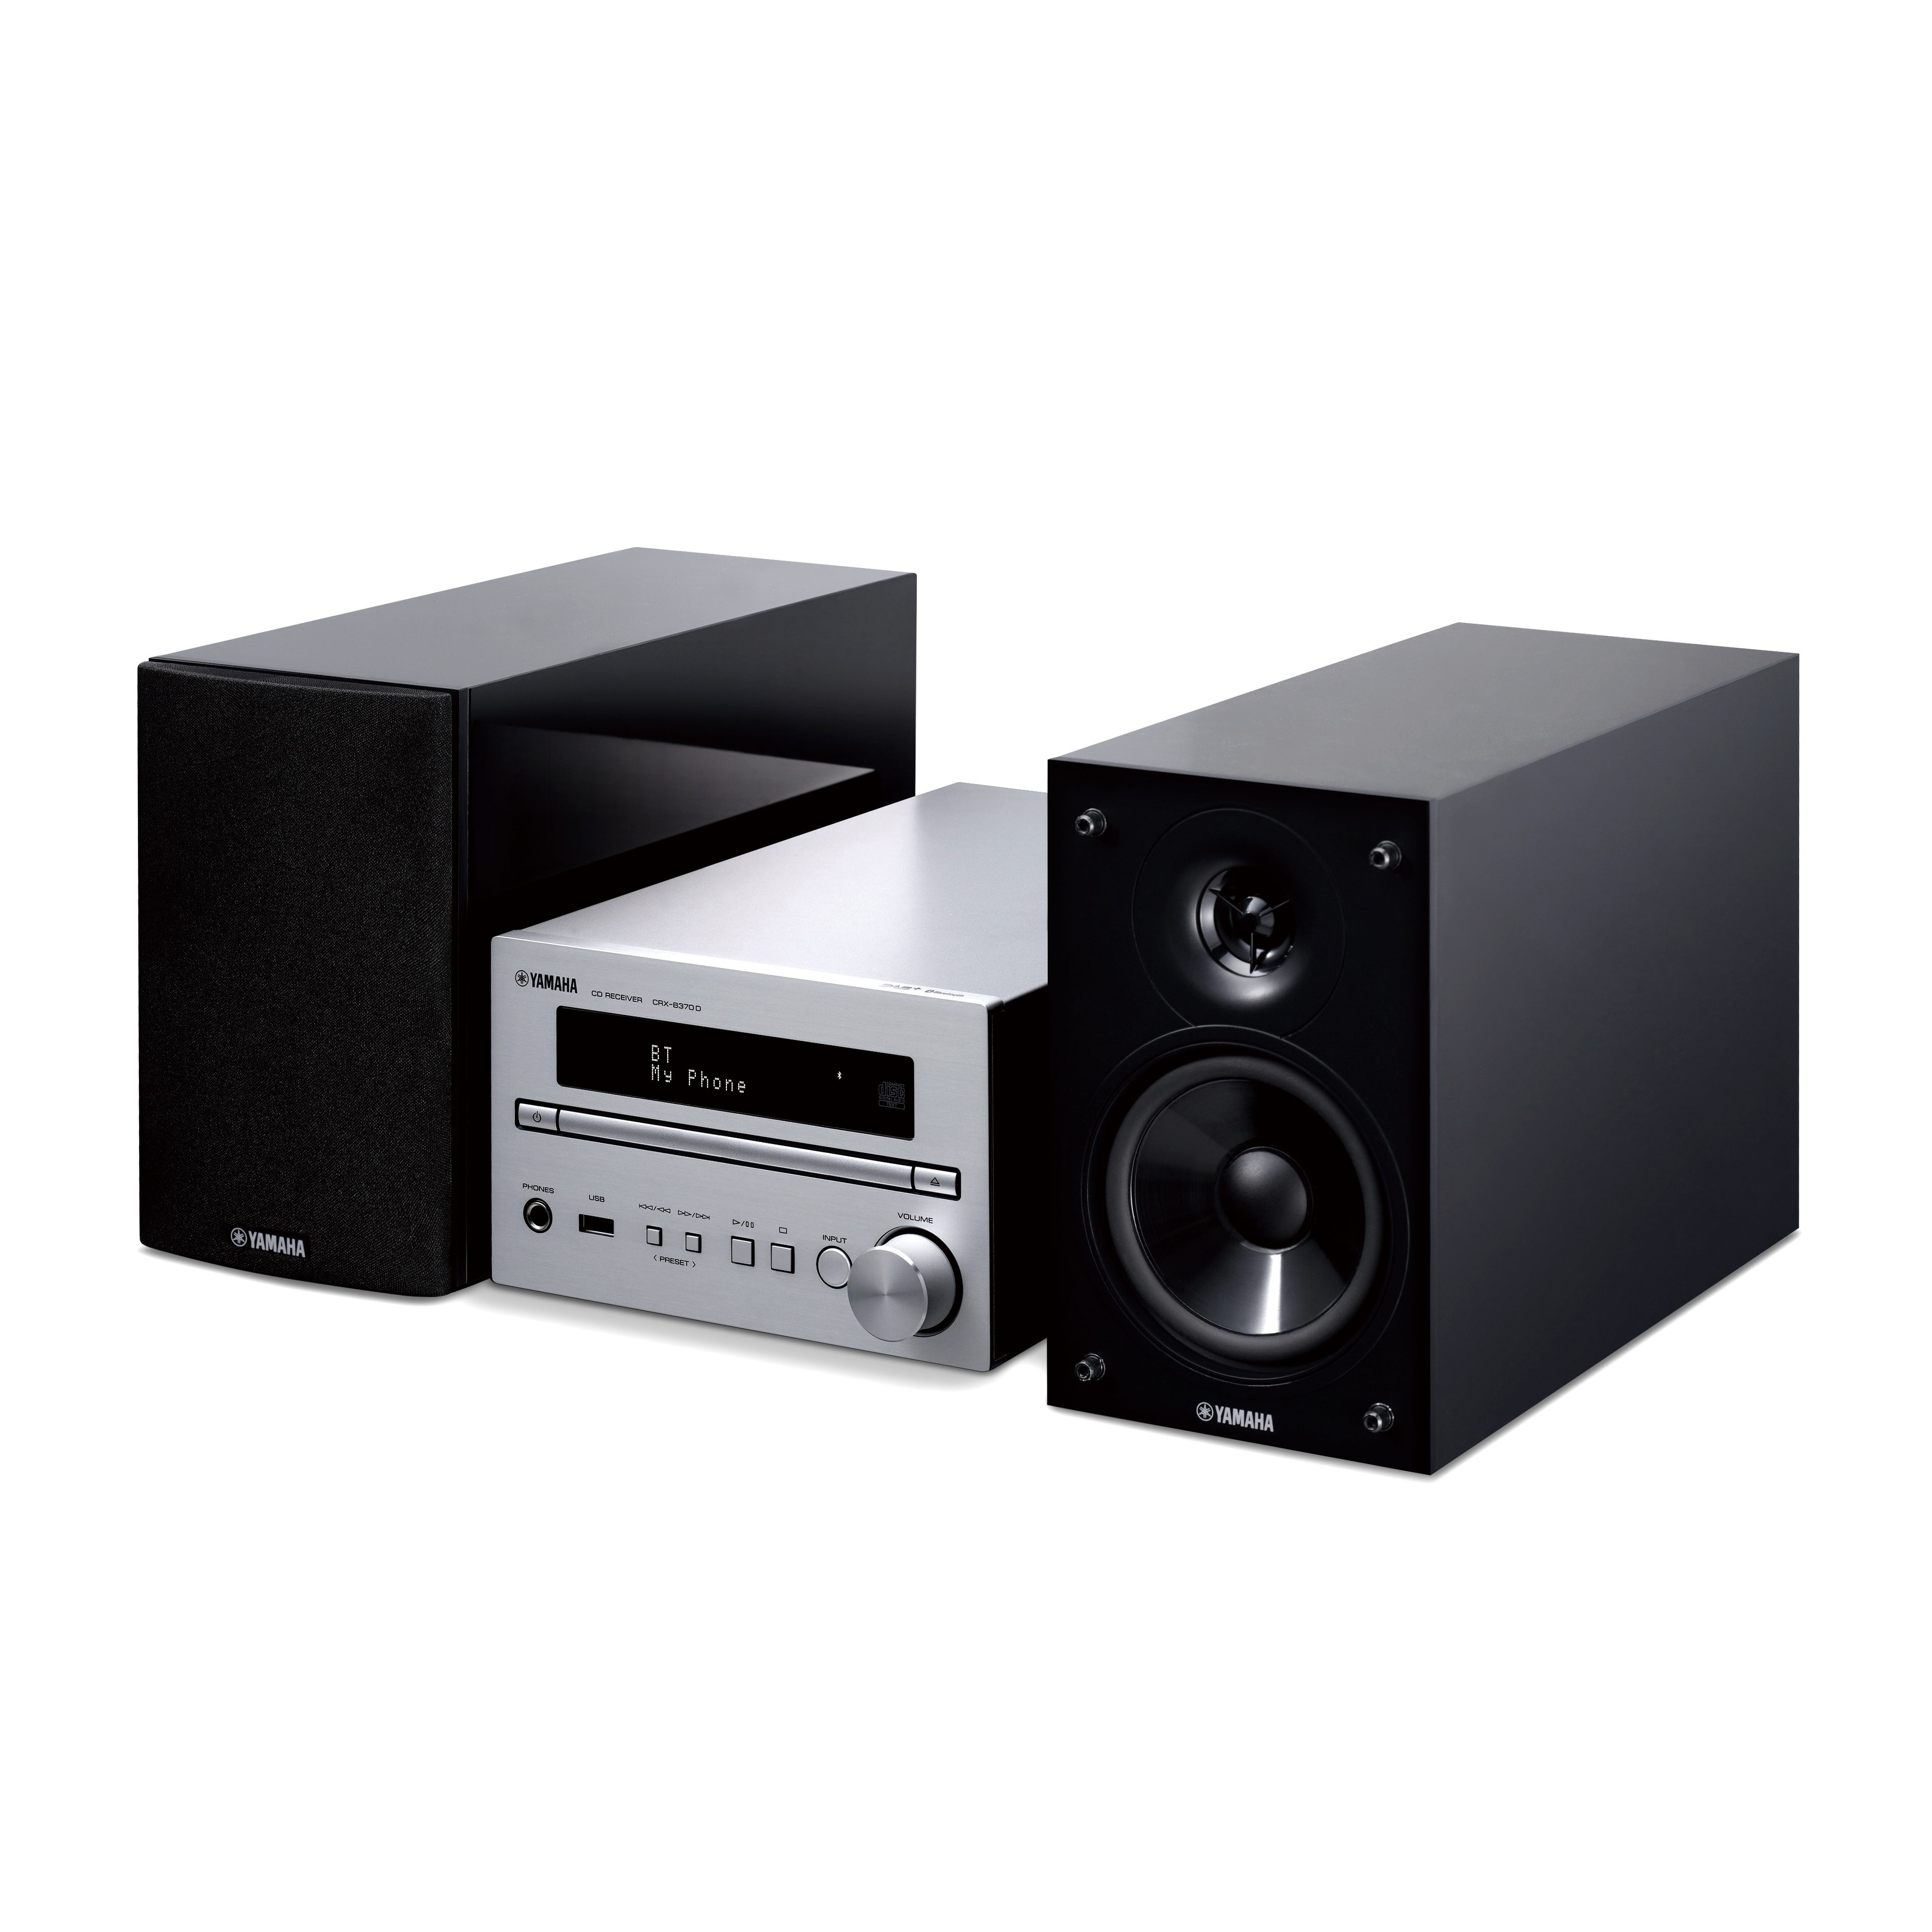 MCR-B370D - Panoramica - Sistemi HiFi - Audio & Video - Prodotti ...